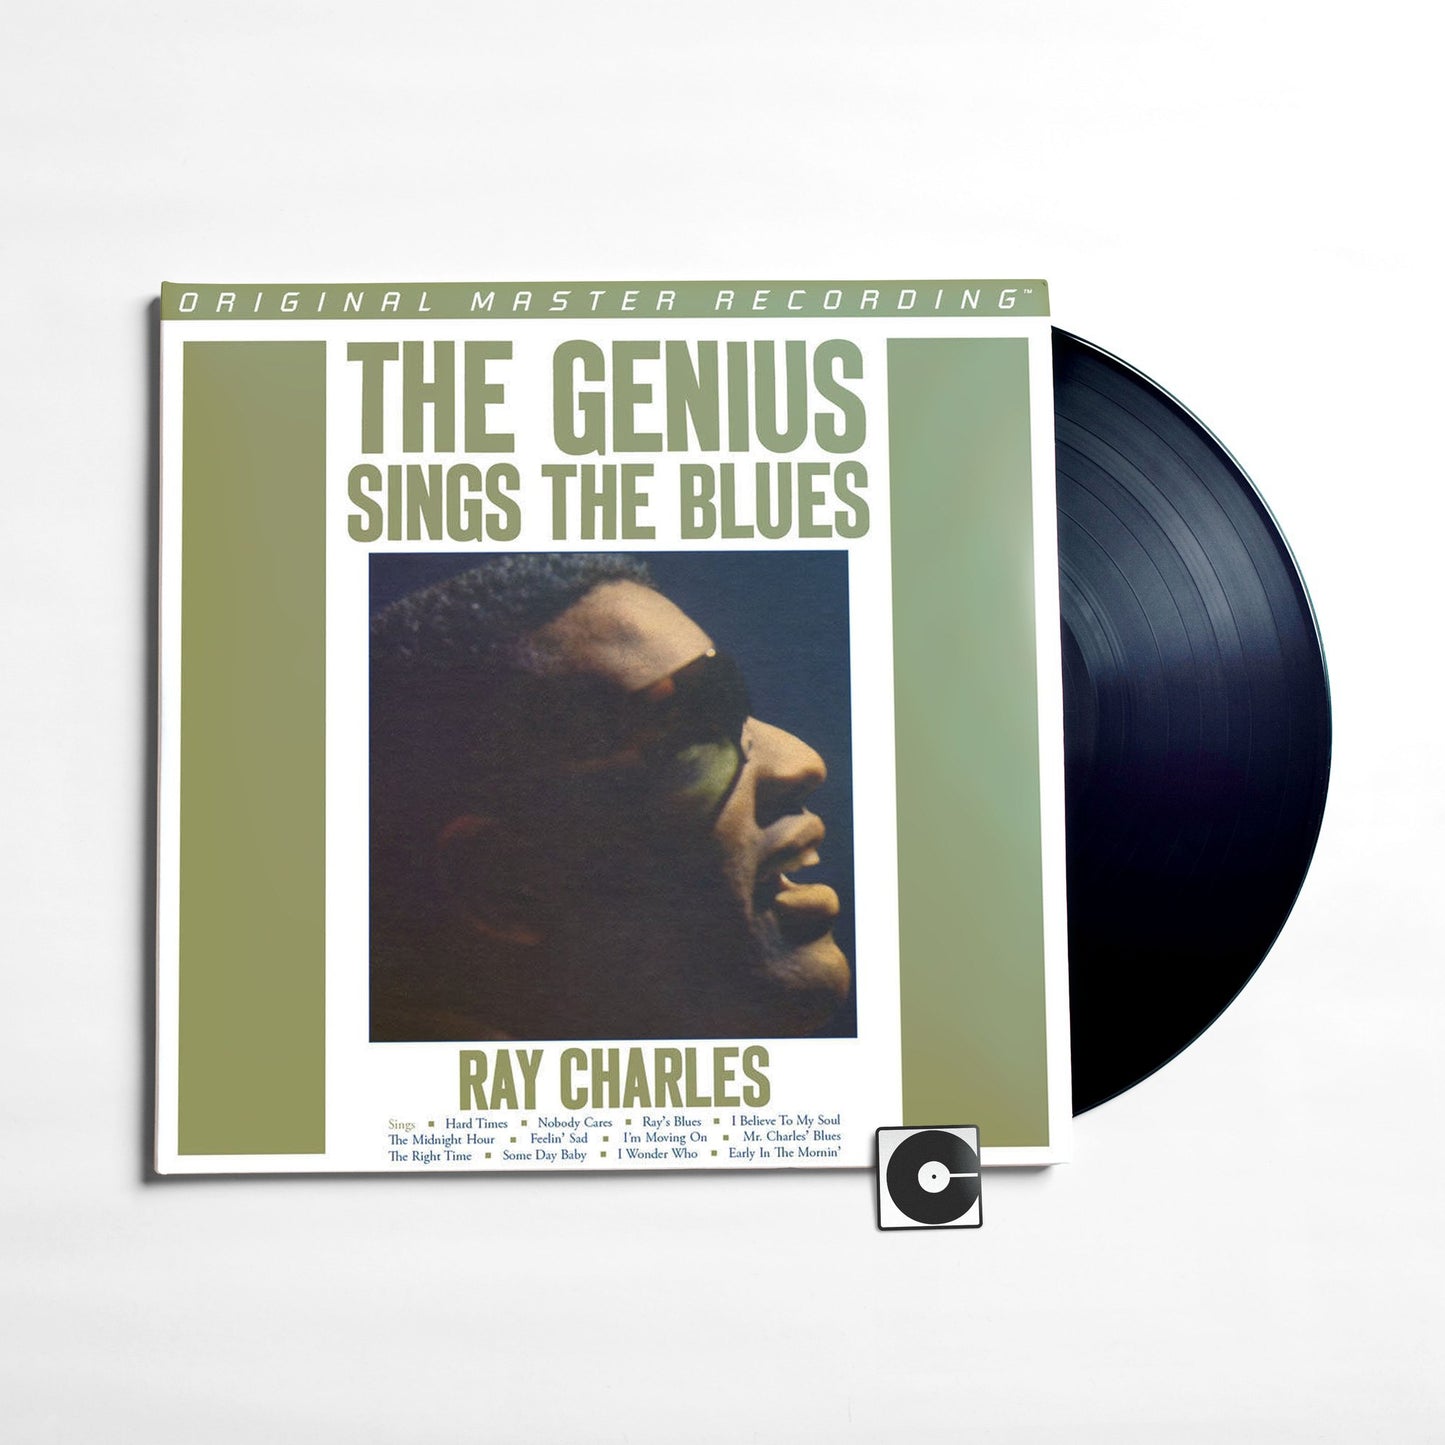 Ray Charles - "The Genius Sings The Blues" MoFi